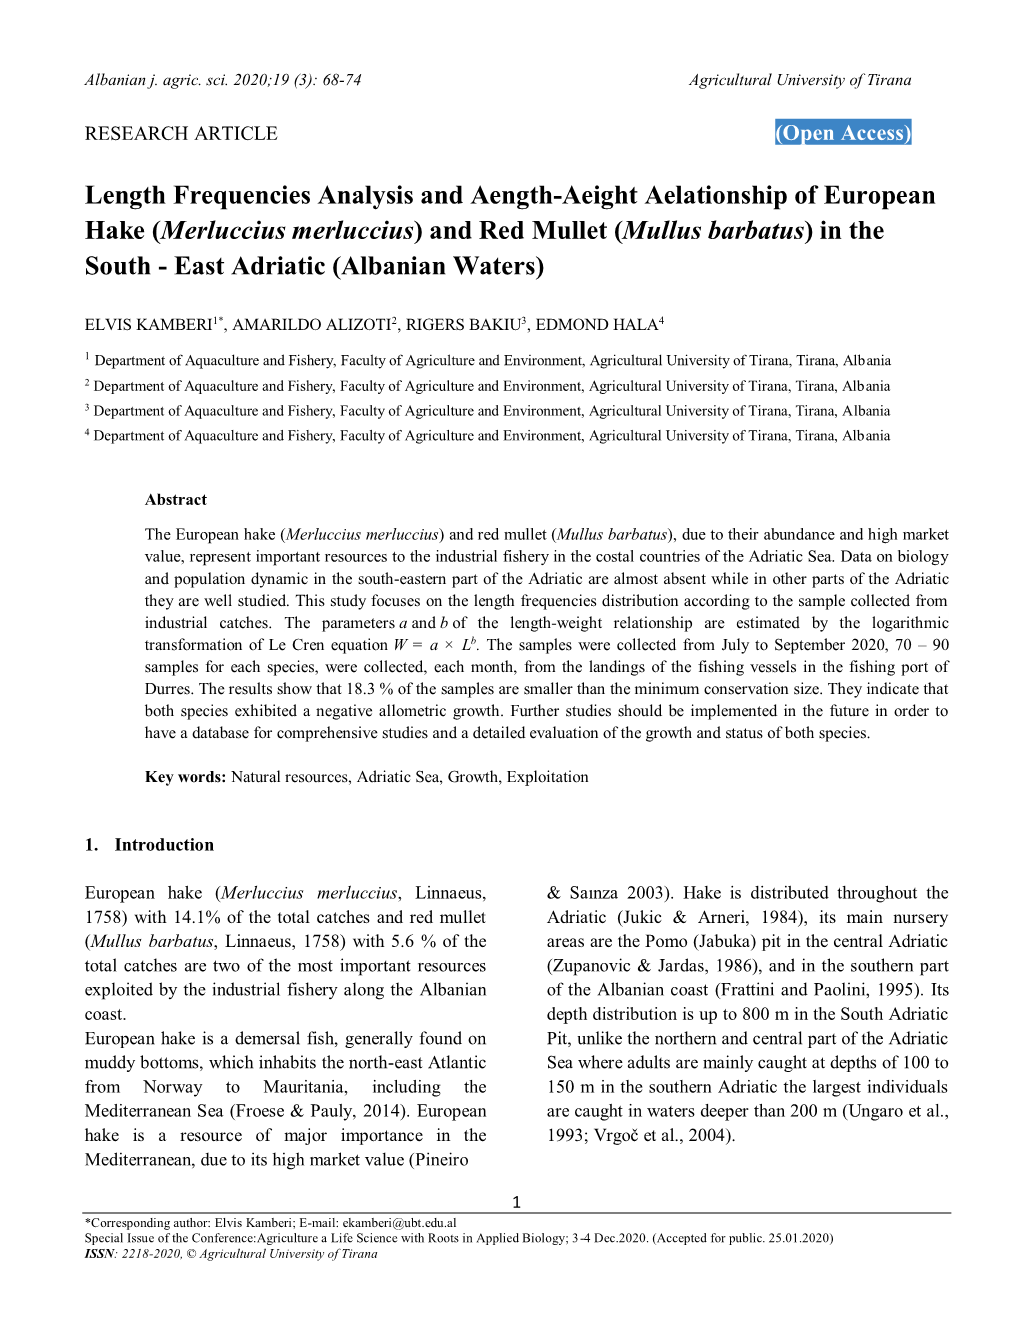 Length Frequencies Analysis and Aength-Aeight Aelationship of European Hake (Merluccius Merluccius) and Red Mullet (Mullus Barba